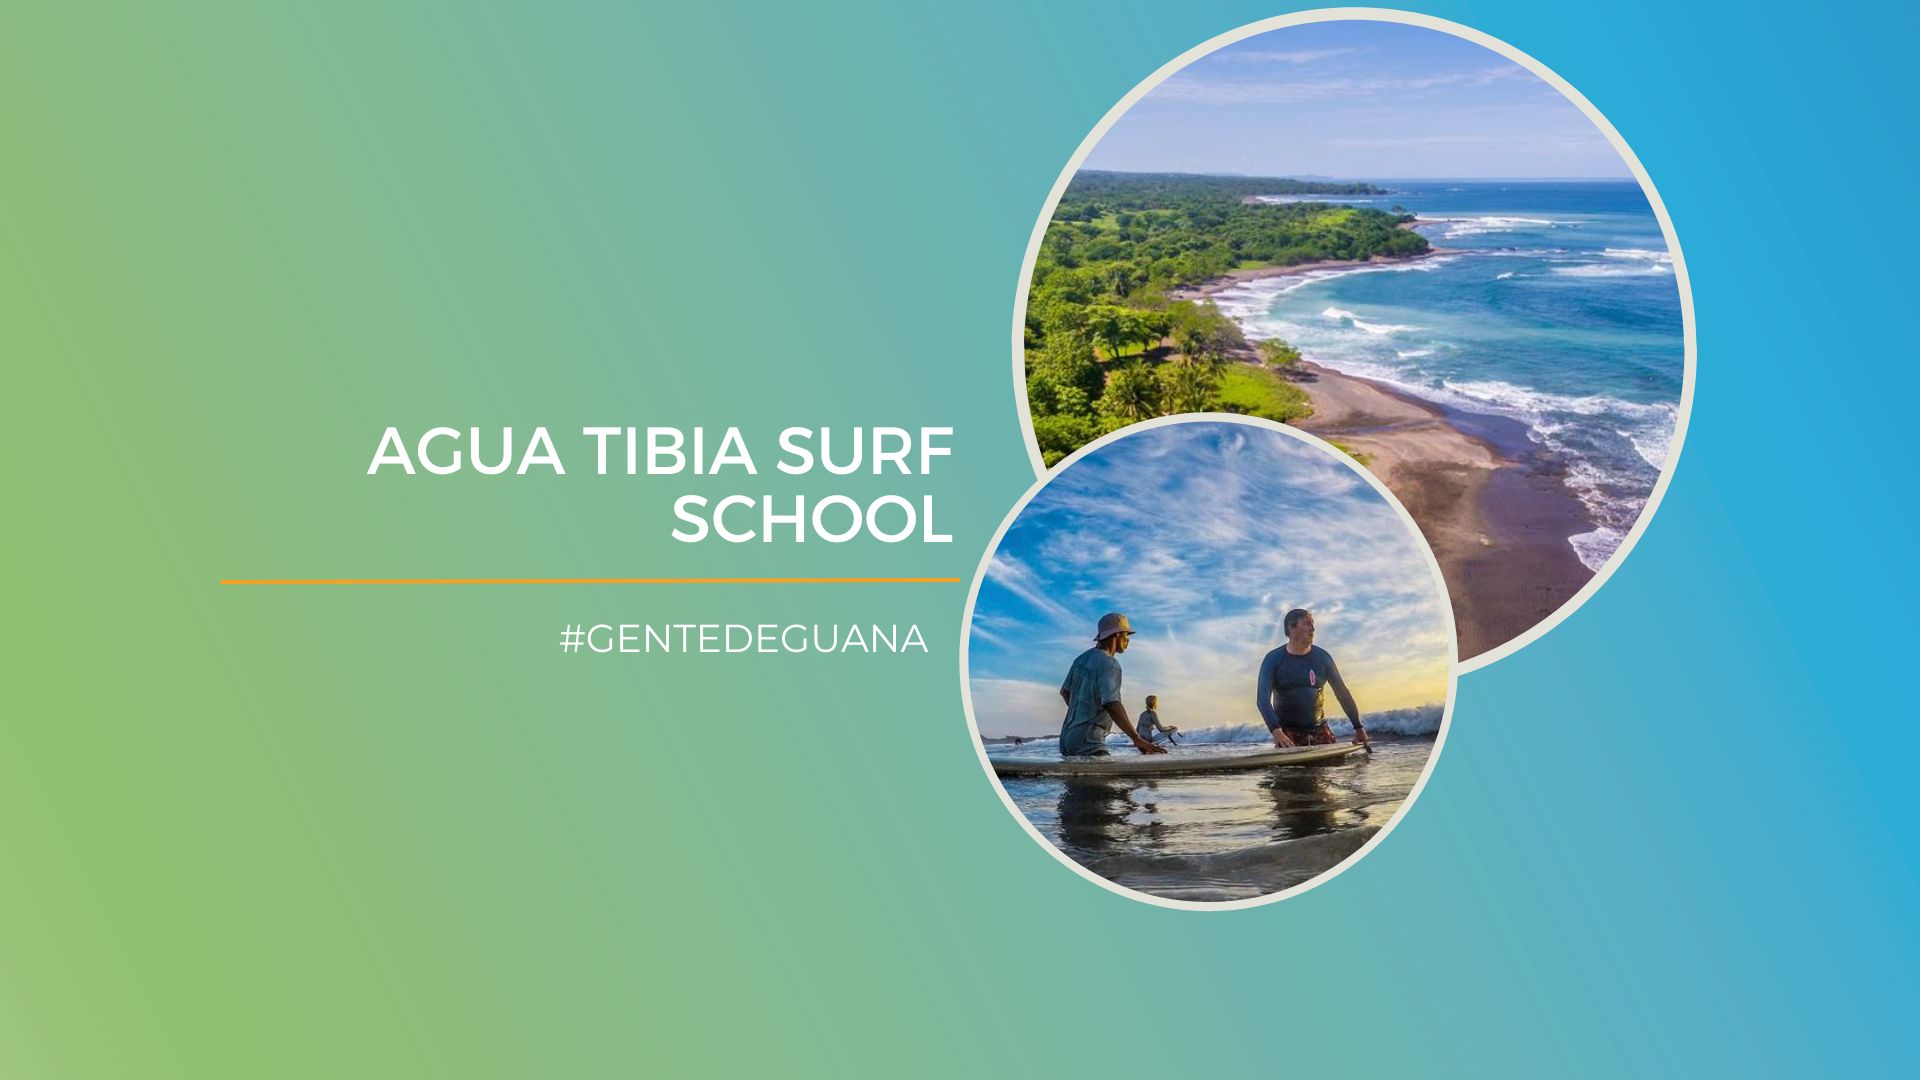 Agua tibia surf school